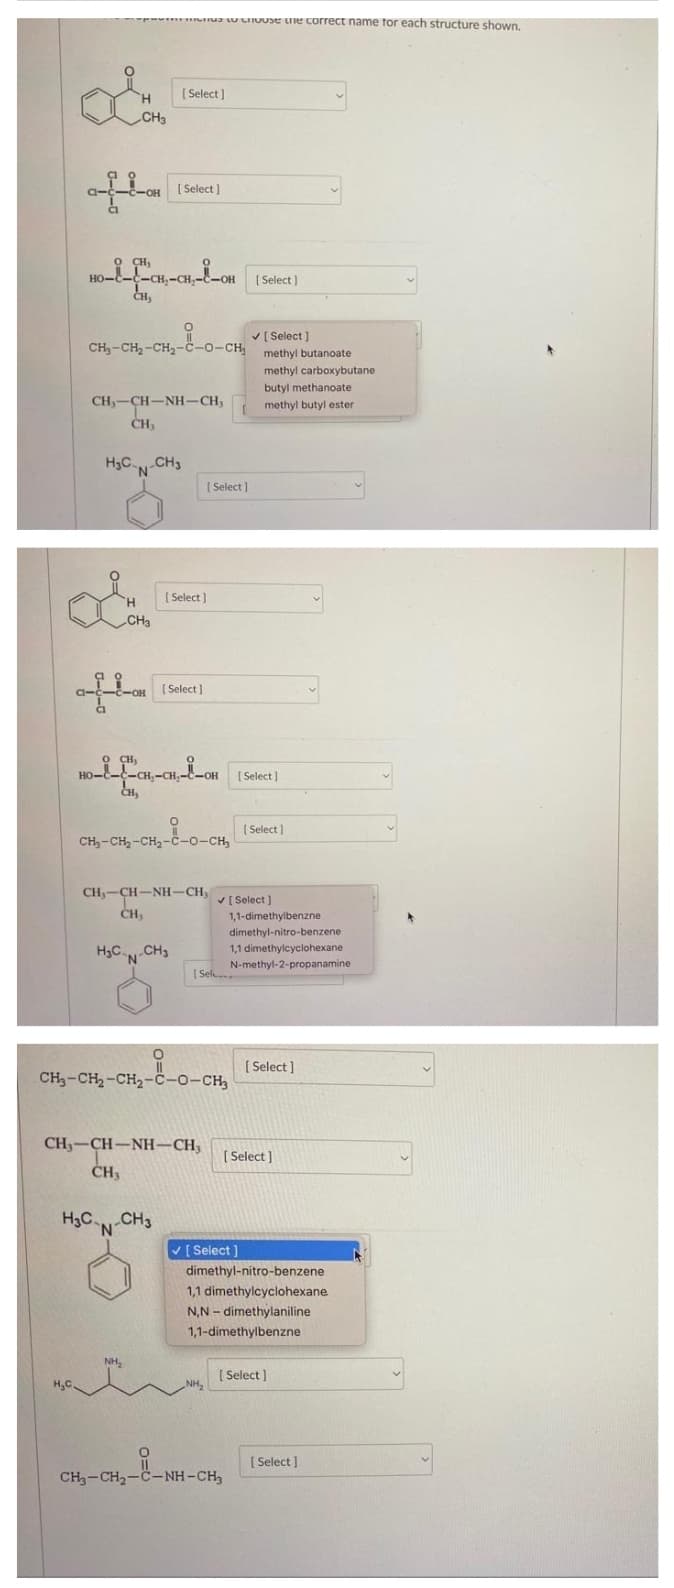 ua U LIIUUSE une correct name tor each structure shown.
[ Select)
H.
CH3
[ Select ]
a-
OH
O CH)
HO-E-E-
-CH,-CH,
CH,
[ Select )
V [ Select ]
CH-CH,-CH2-C-o-CH,
methyl butanoate
methyl carboxybutane
butyl methanoate
CH,-CH-NH-CH,
CH,
methyl butyl ester
H3CN-CH3
'N'
[ Select )
[ Select )
H.
CH3
-OH
[ Select ]
CI
O CH,
HO-C
-CH,-CH,
[ Select )
ČH,
( Select )
CH,-CH, -CH2-č-o-CH,
CH,-CH-NH-CH,
V[ Select ]
CH,
1,1-dimethylbenzne
dimethyl-nitro-benzene
H3C CH3
N.
1,1 dimethylcyclohexane
N-methyl-2-propanamine
[ Sel
[ Select ]
CH3-CH2-CH2-c-o-CH,
CH3-CH-NH-CH;
( Select ]
ČH3
H3C.,
-CH
V [ Select ]
dimethyl-nitro-benzene
1,1 dimethylcyclohexane
N,N - dimethylaniline
1,1-dimethylbenzne
NH,
[ Select)
H,C.
NH,
[ Select ]
CH3-CH2-C-NH - CH,
